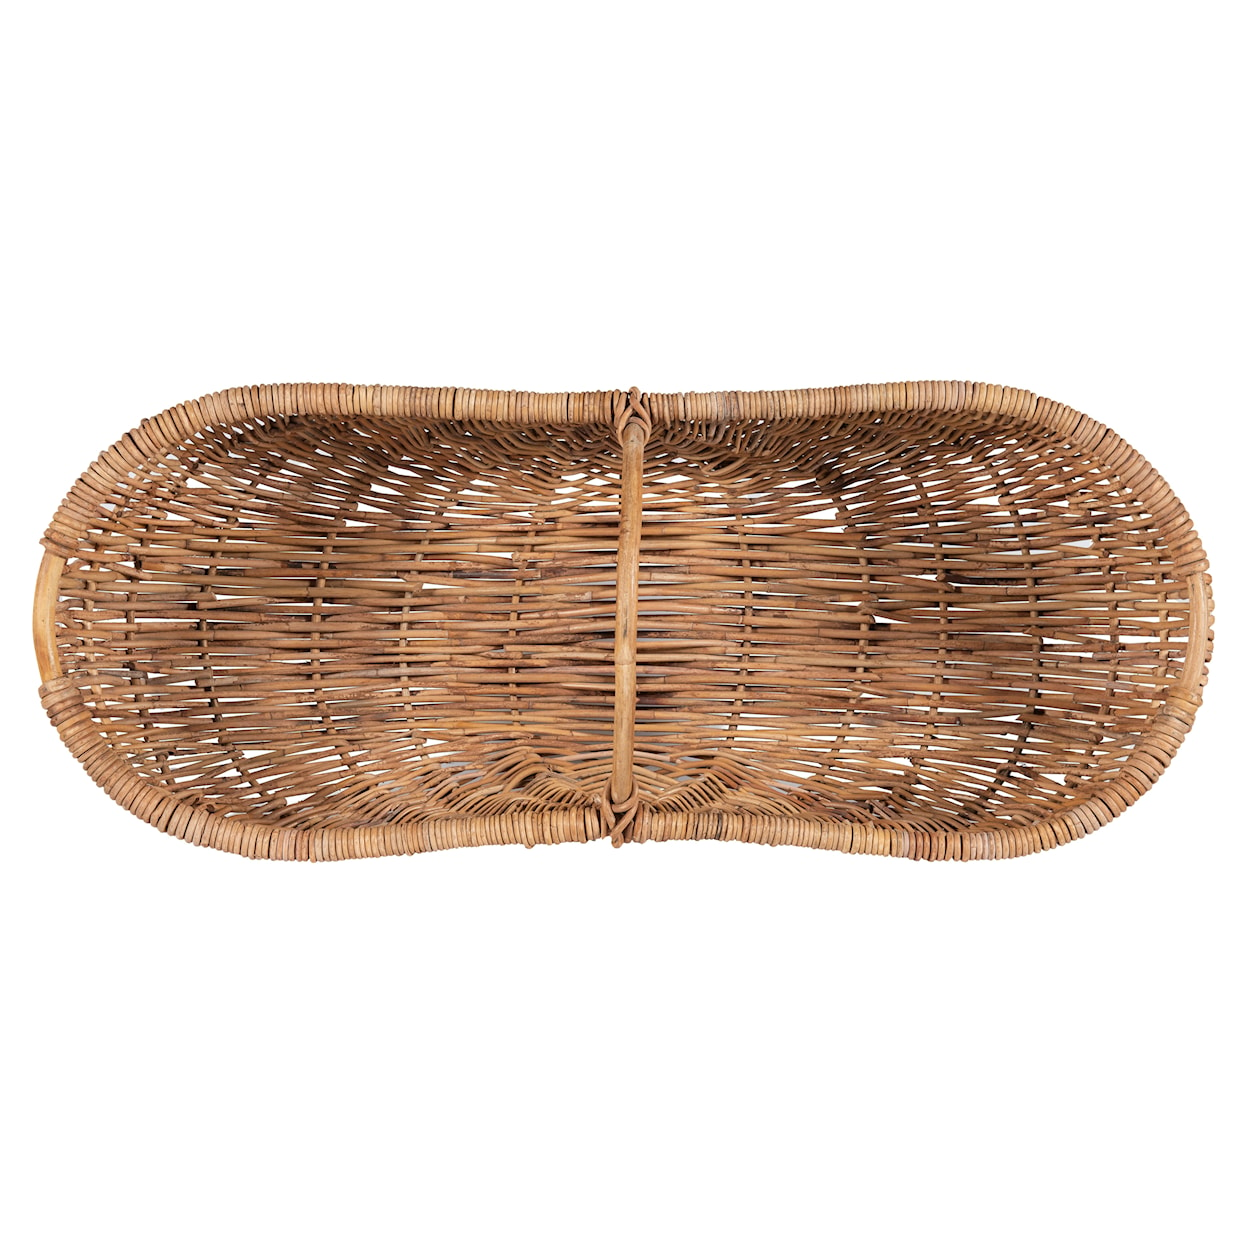 BOBO Intriguing Objects BOBO Intriguing Objects Moisson Solid Wood Basket - Large